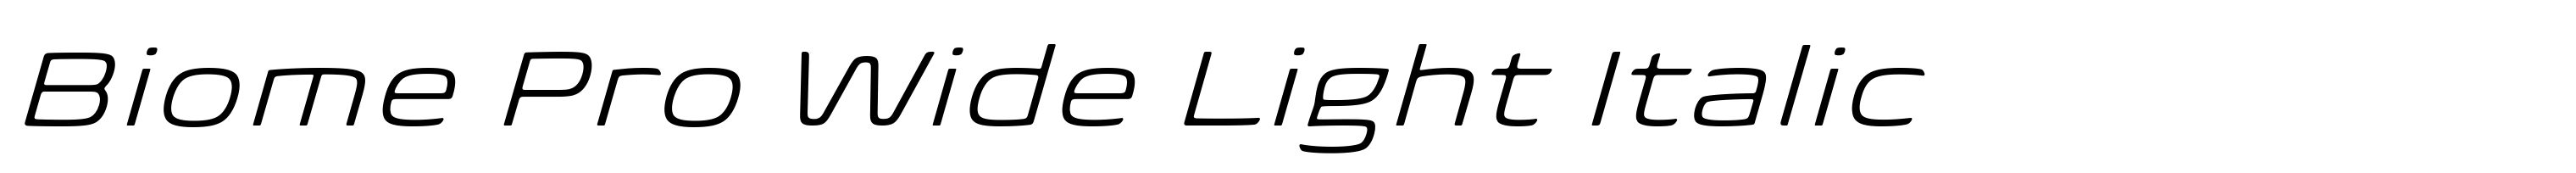 Biome Pro Wide Light Italic